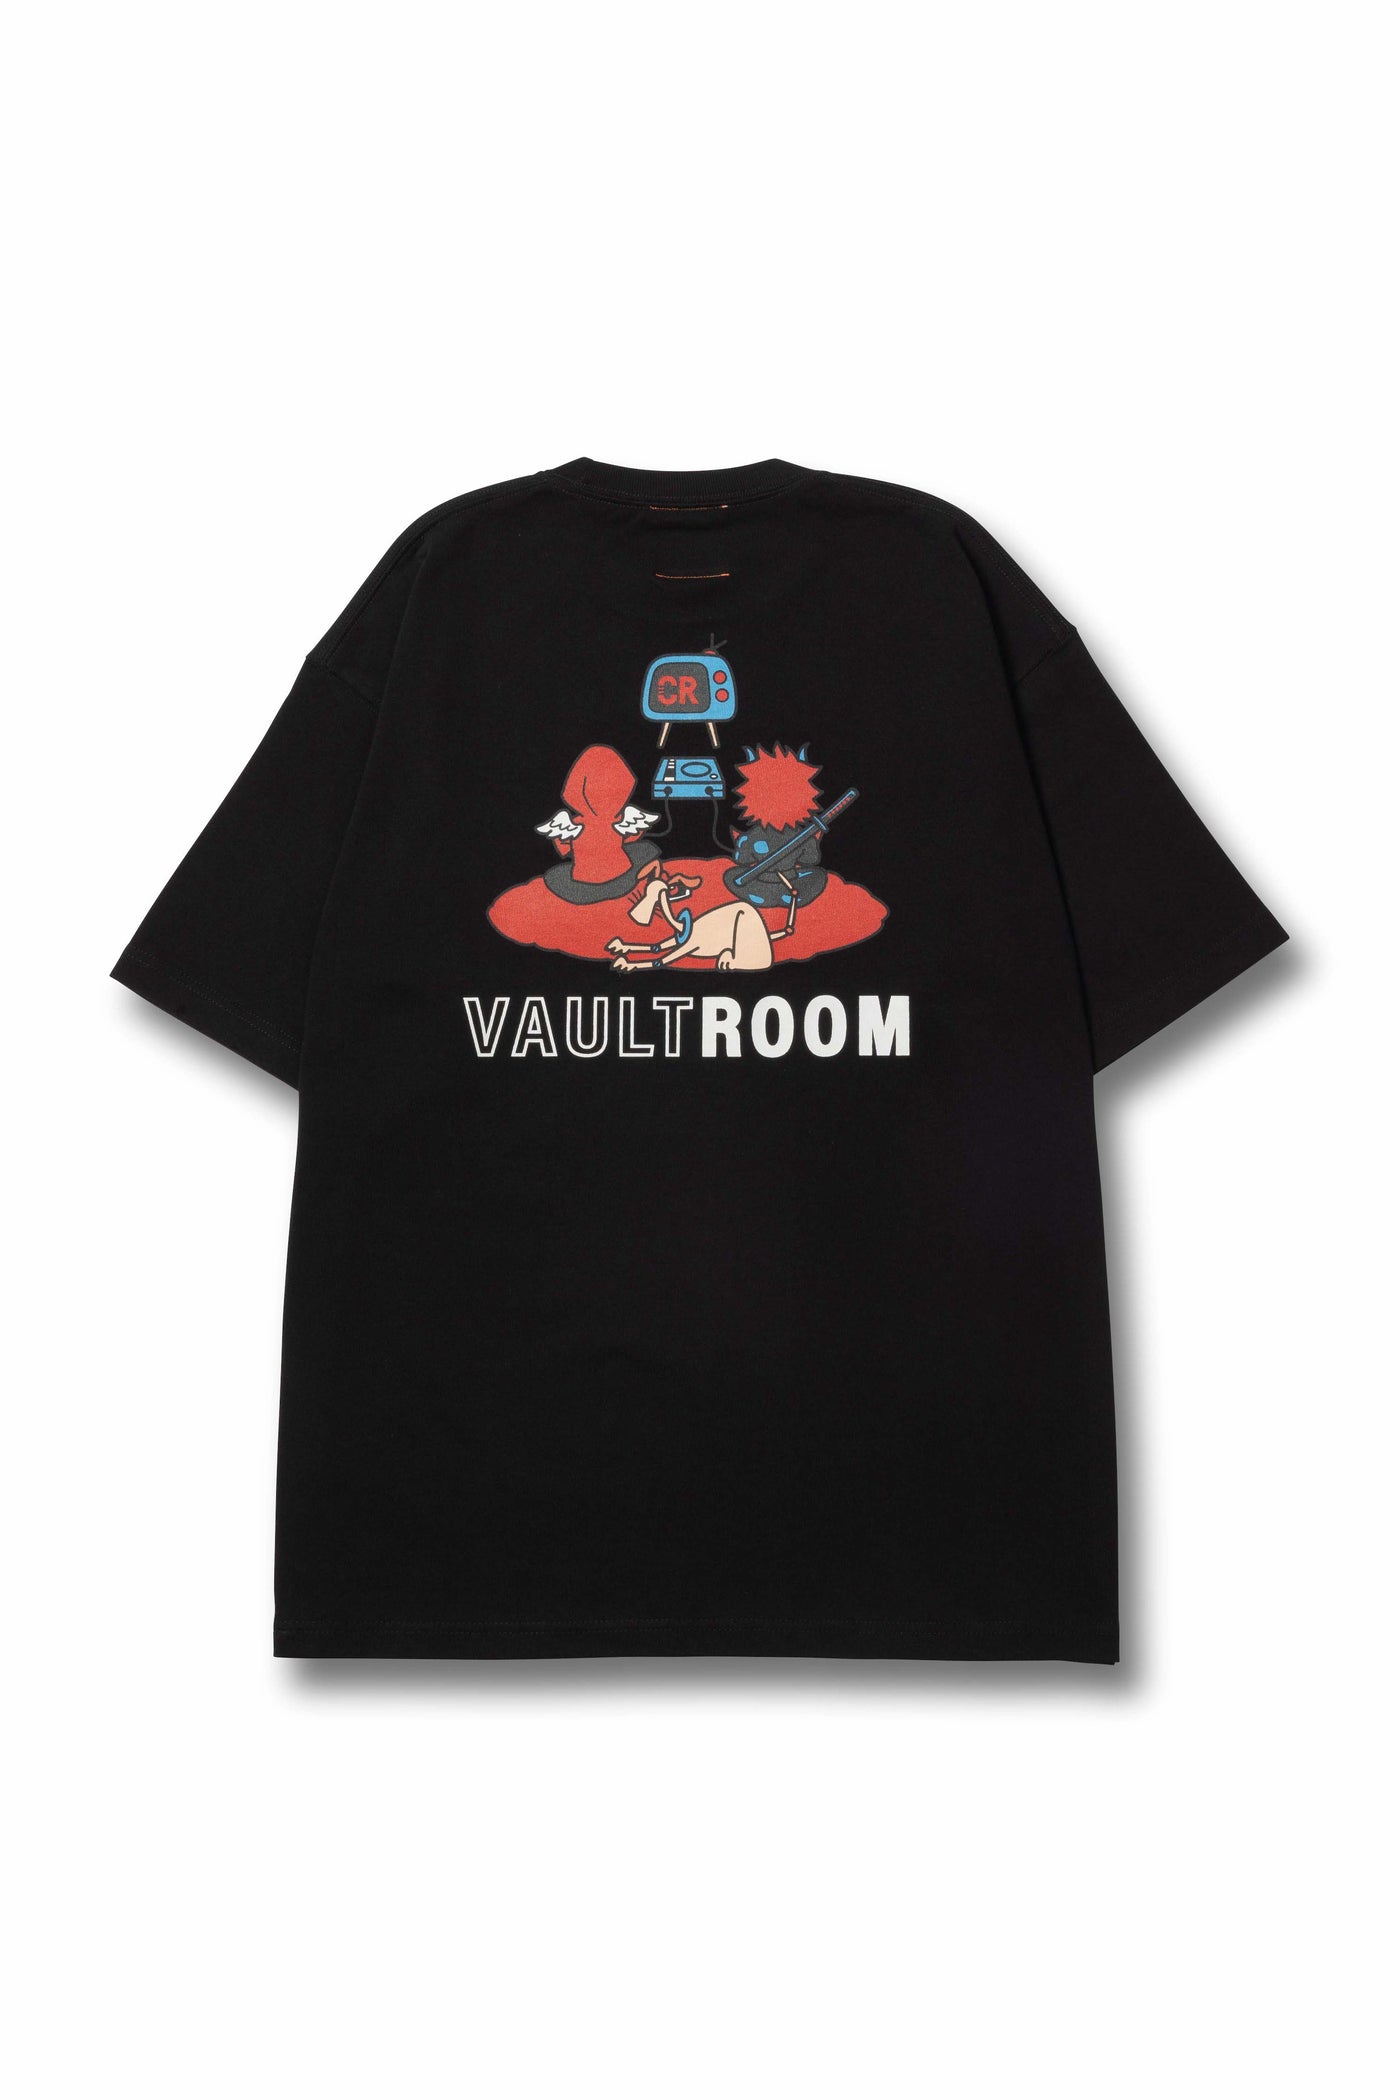 vaultroom "DARUSAKA" TEE / BLK